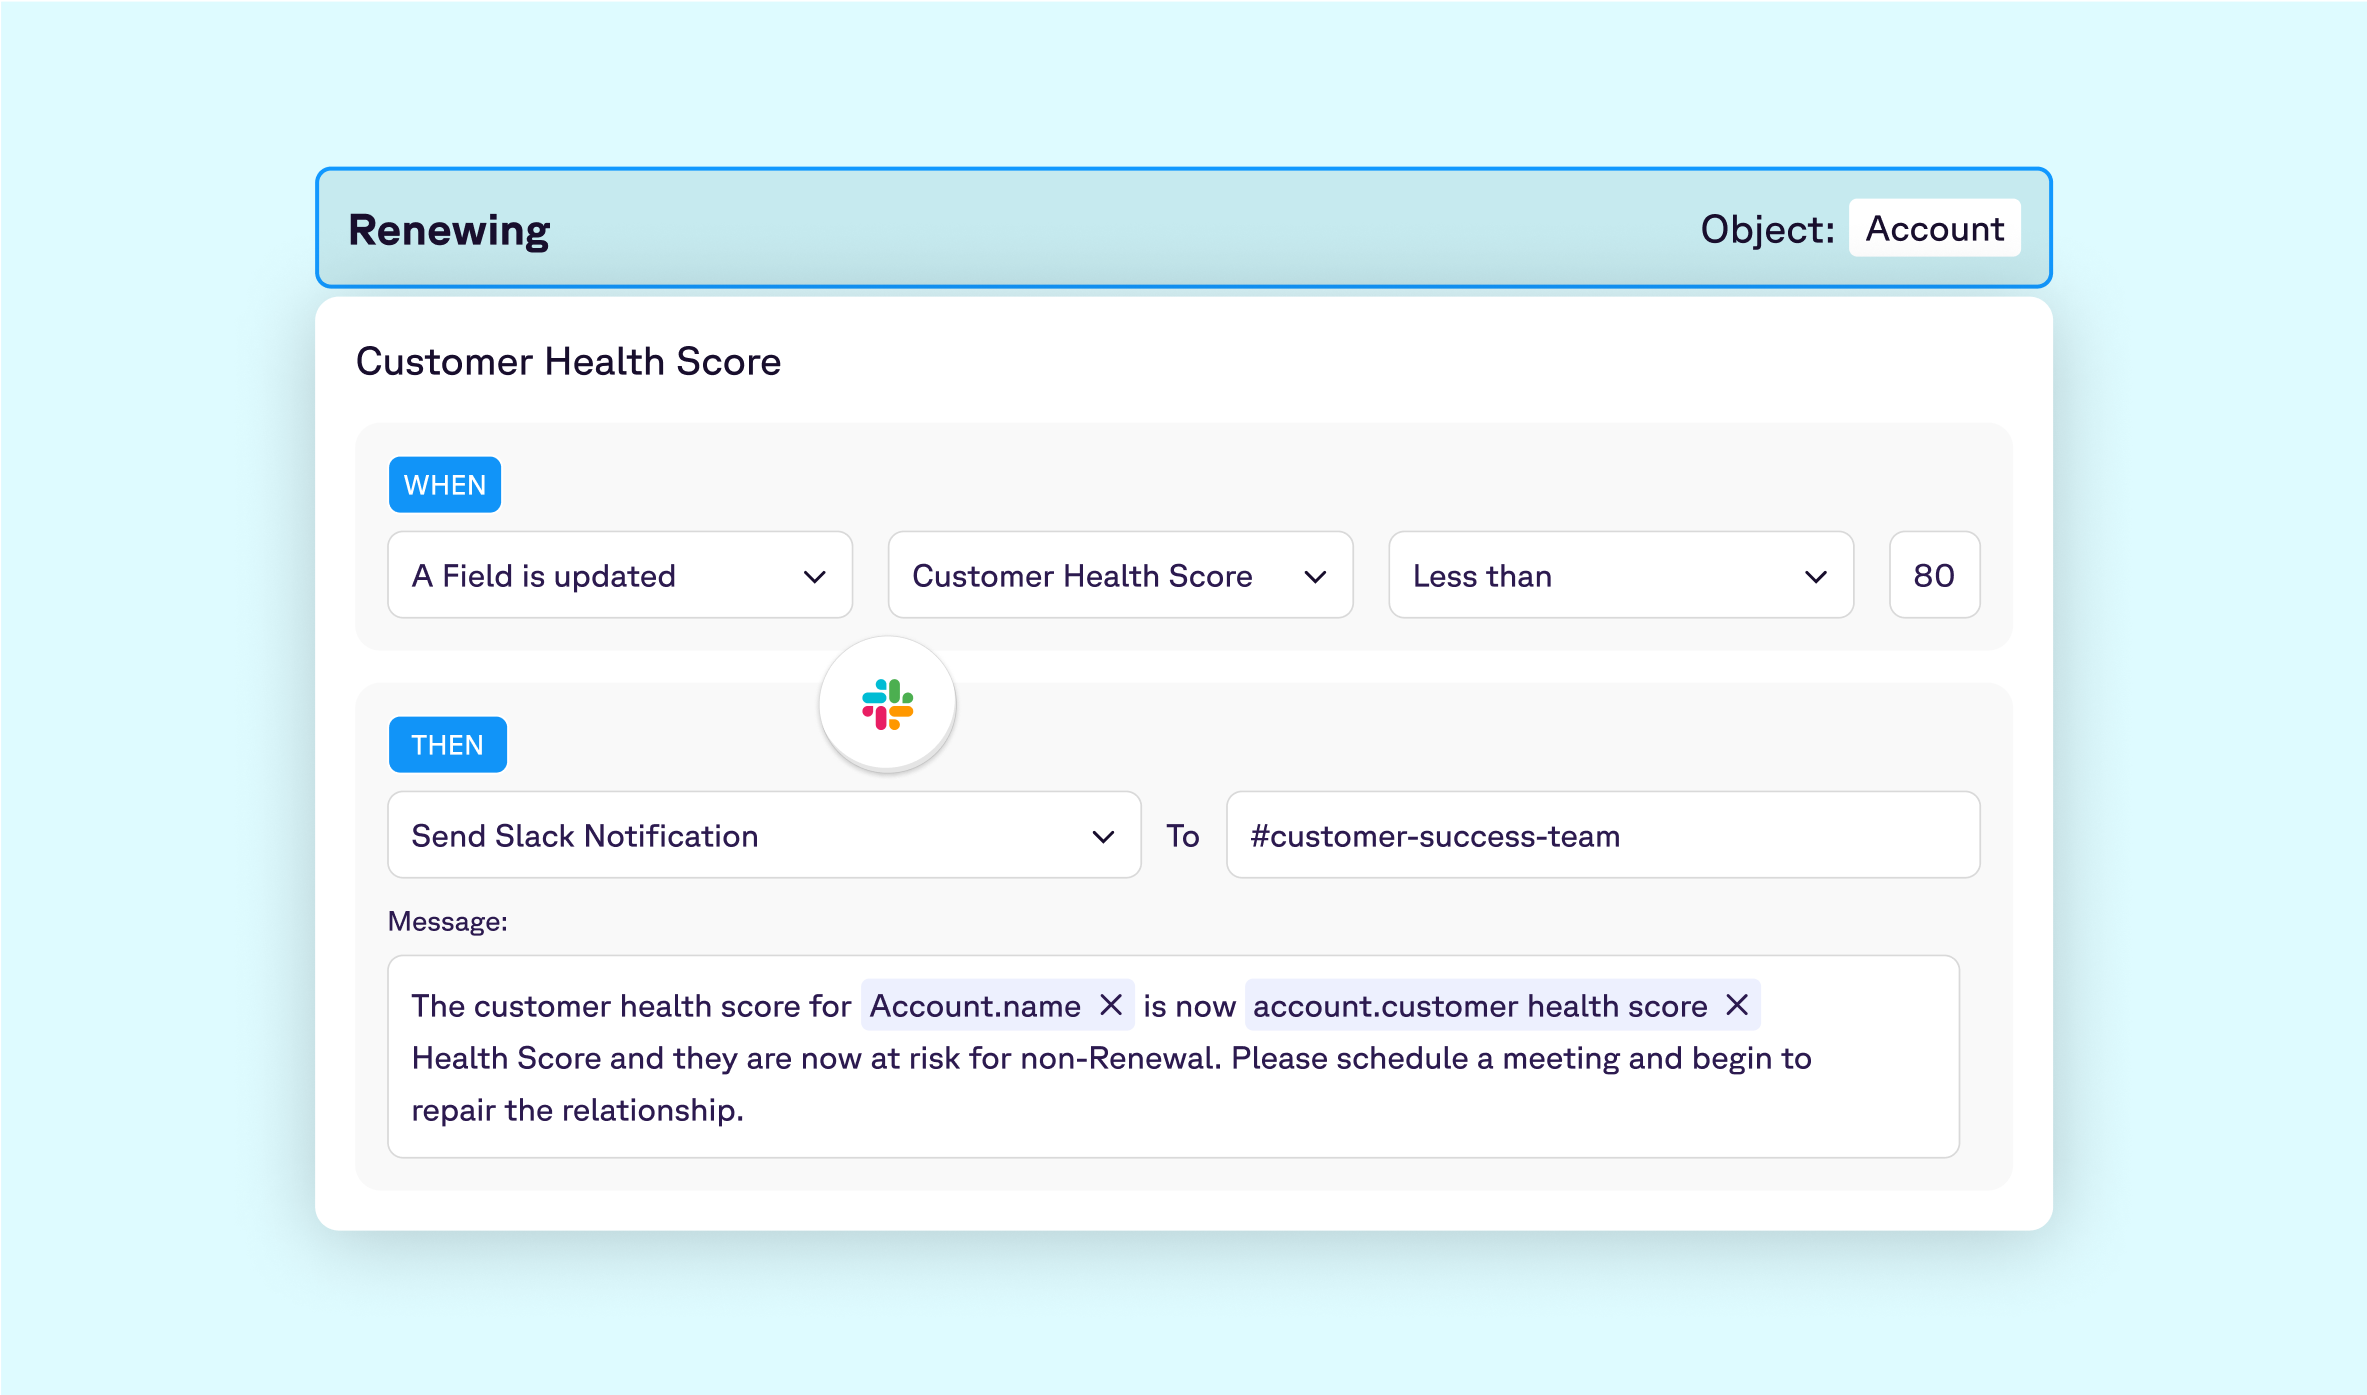 Customer Health Score